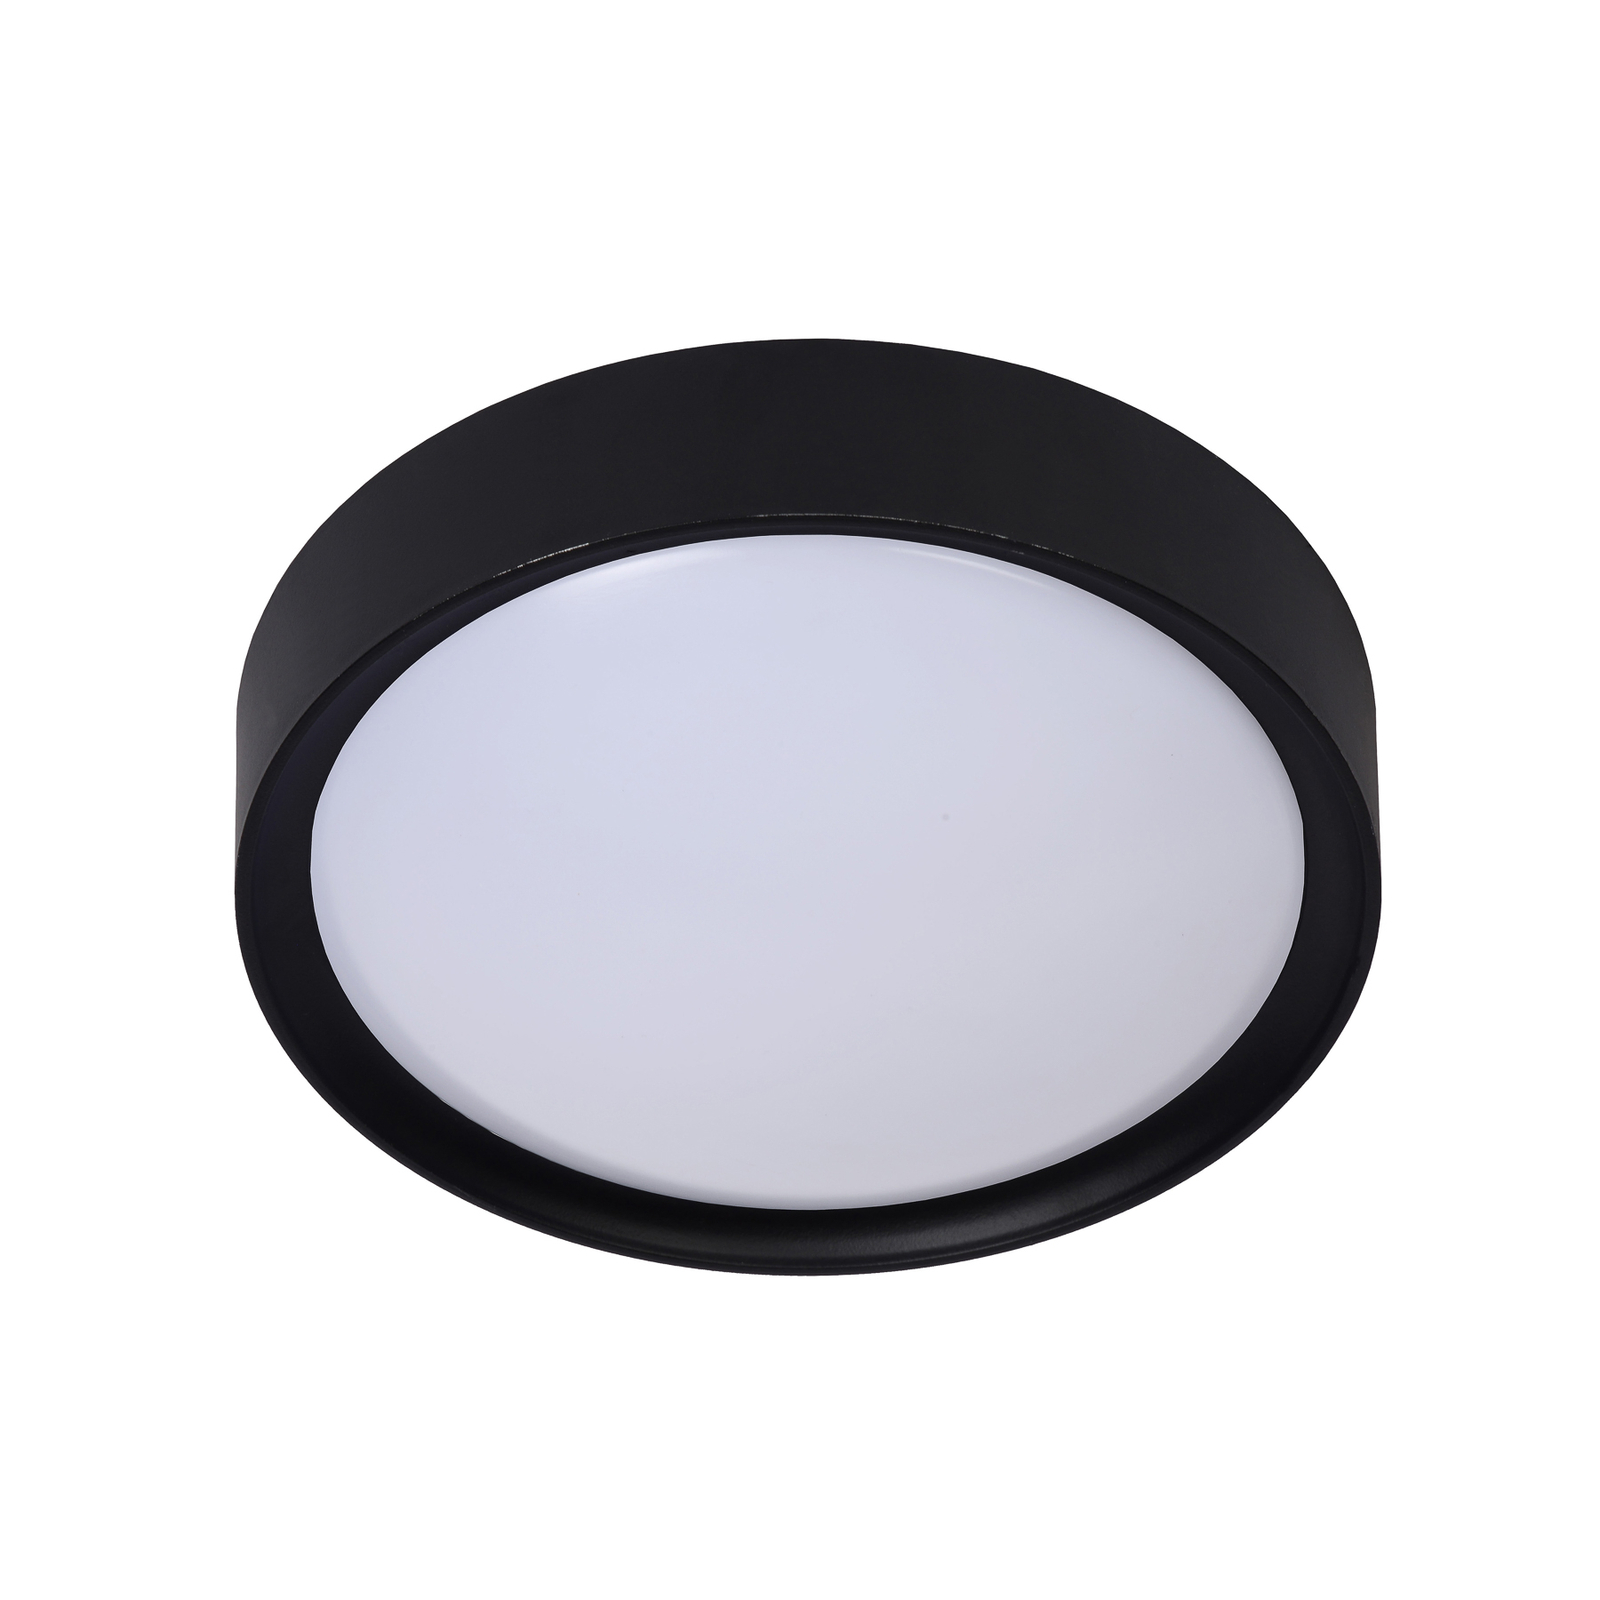 Lex ceiling light, round, Ø 25 cm black